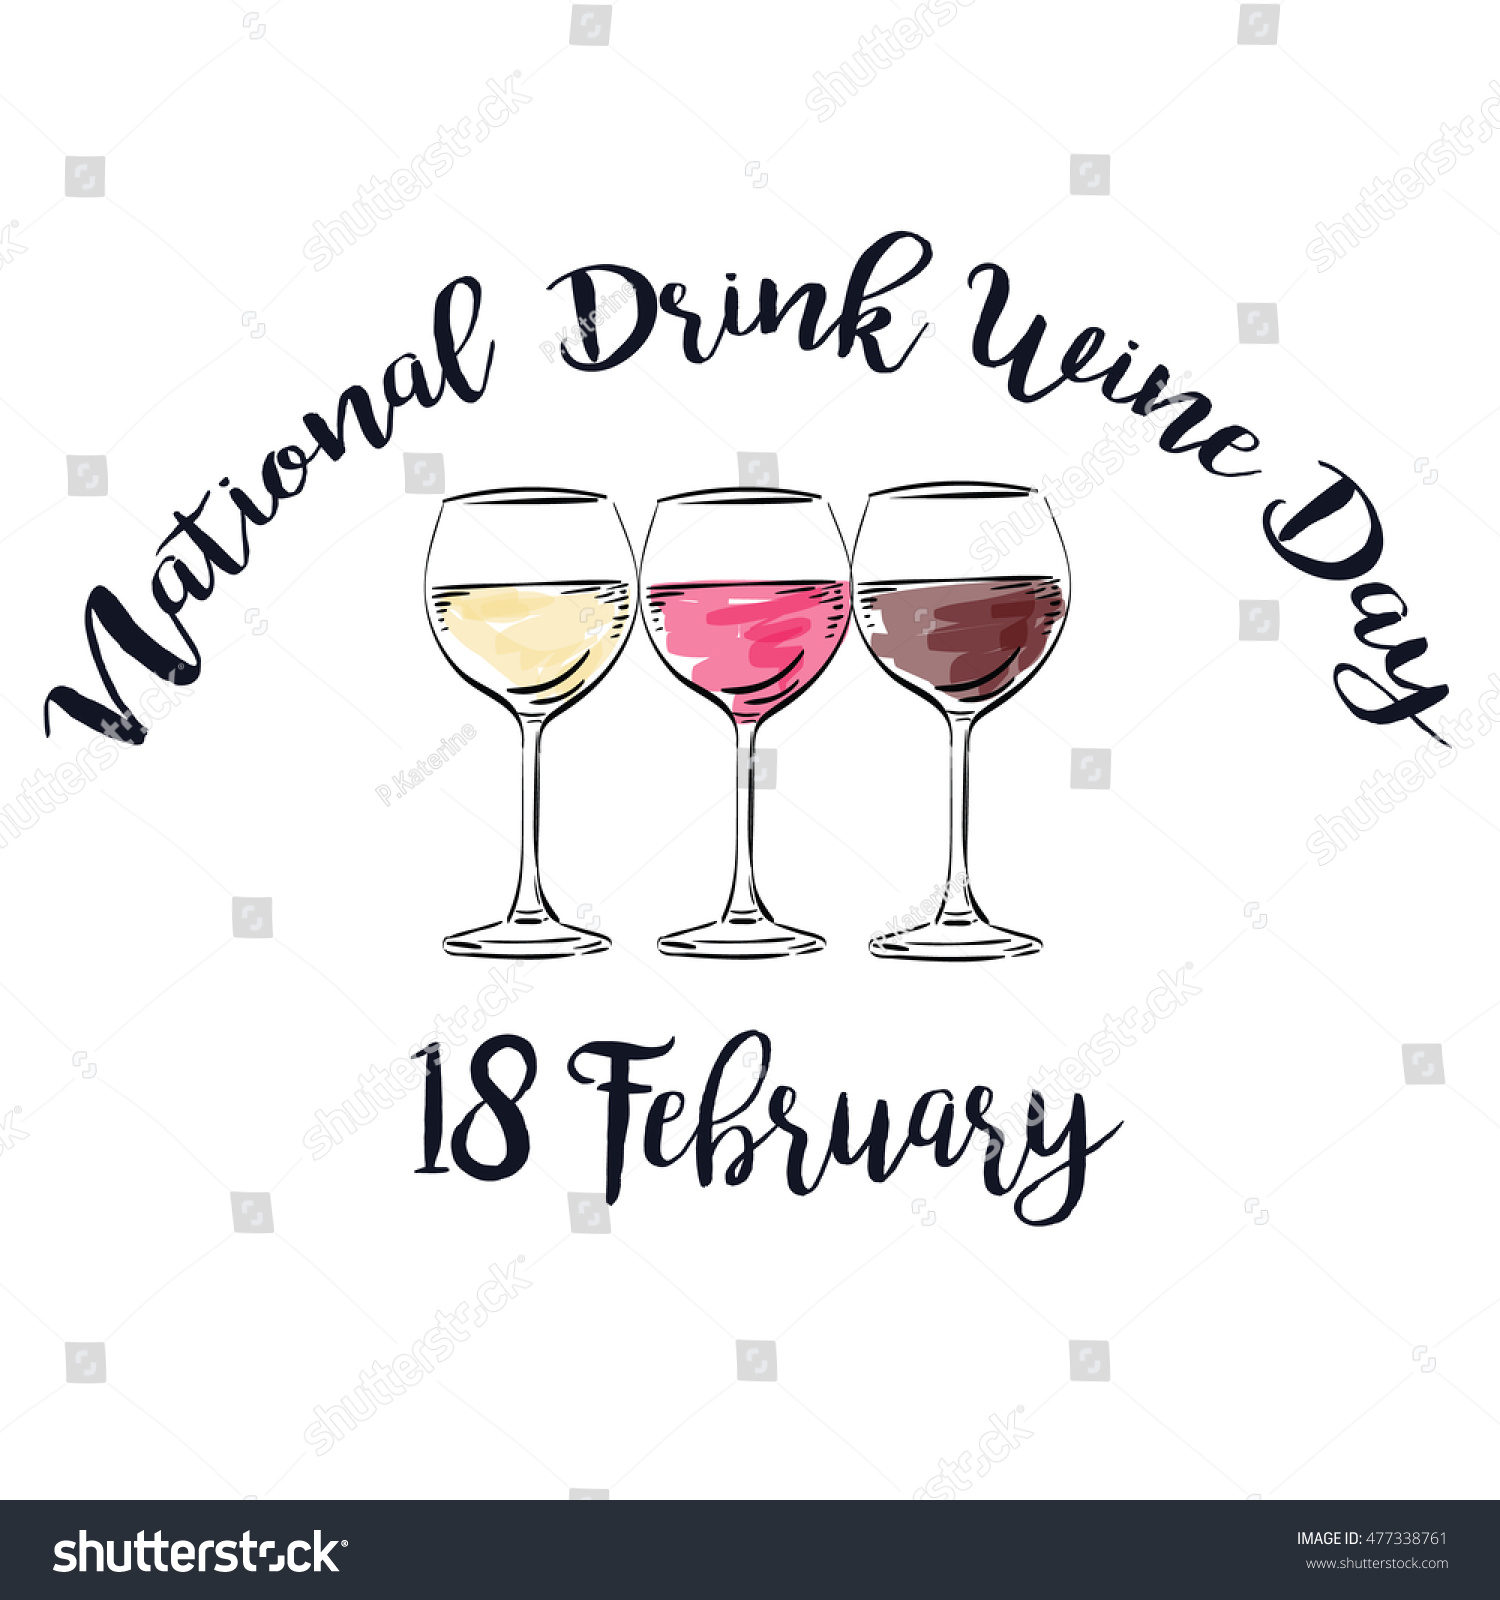 Image result for national drink wine day